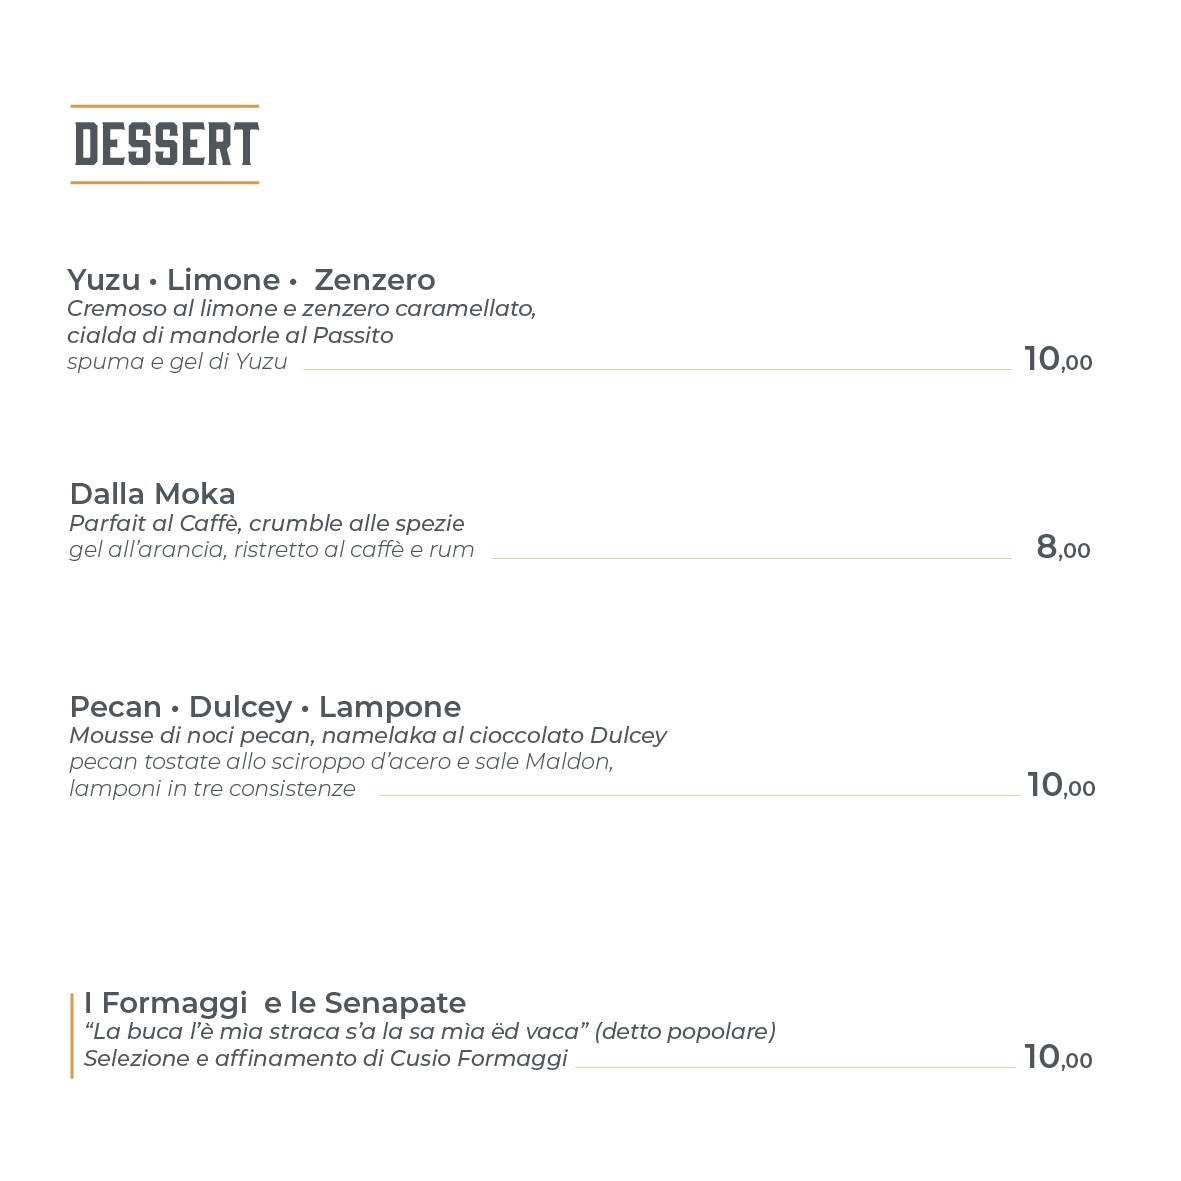 202211 menu dessert novembre 2022